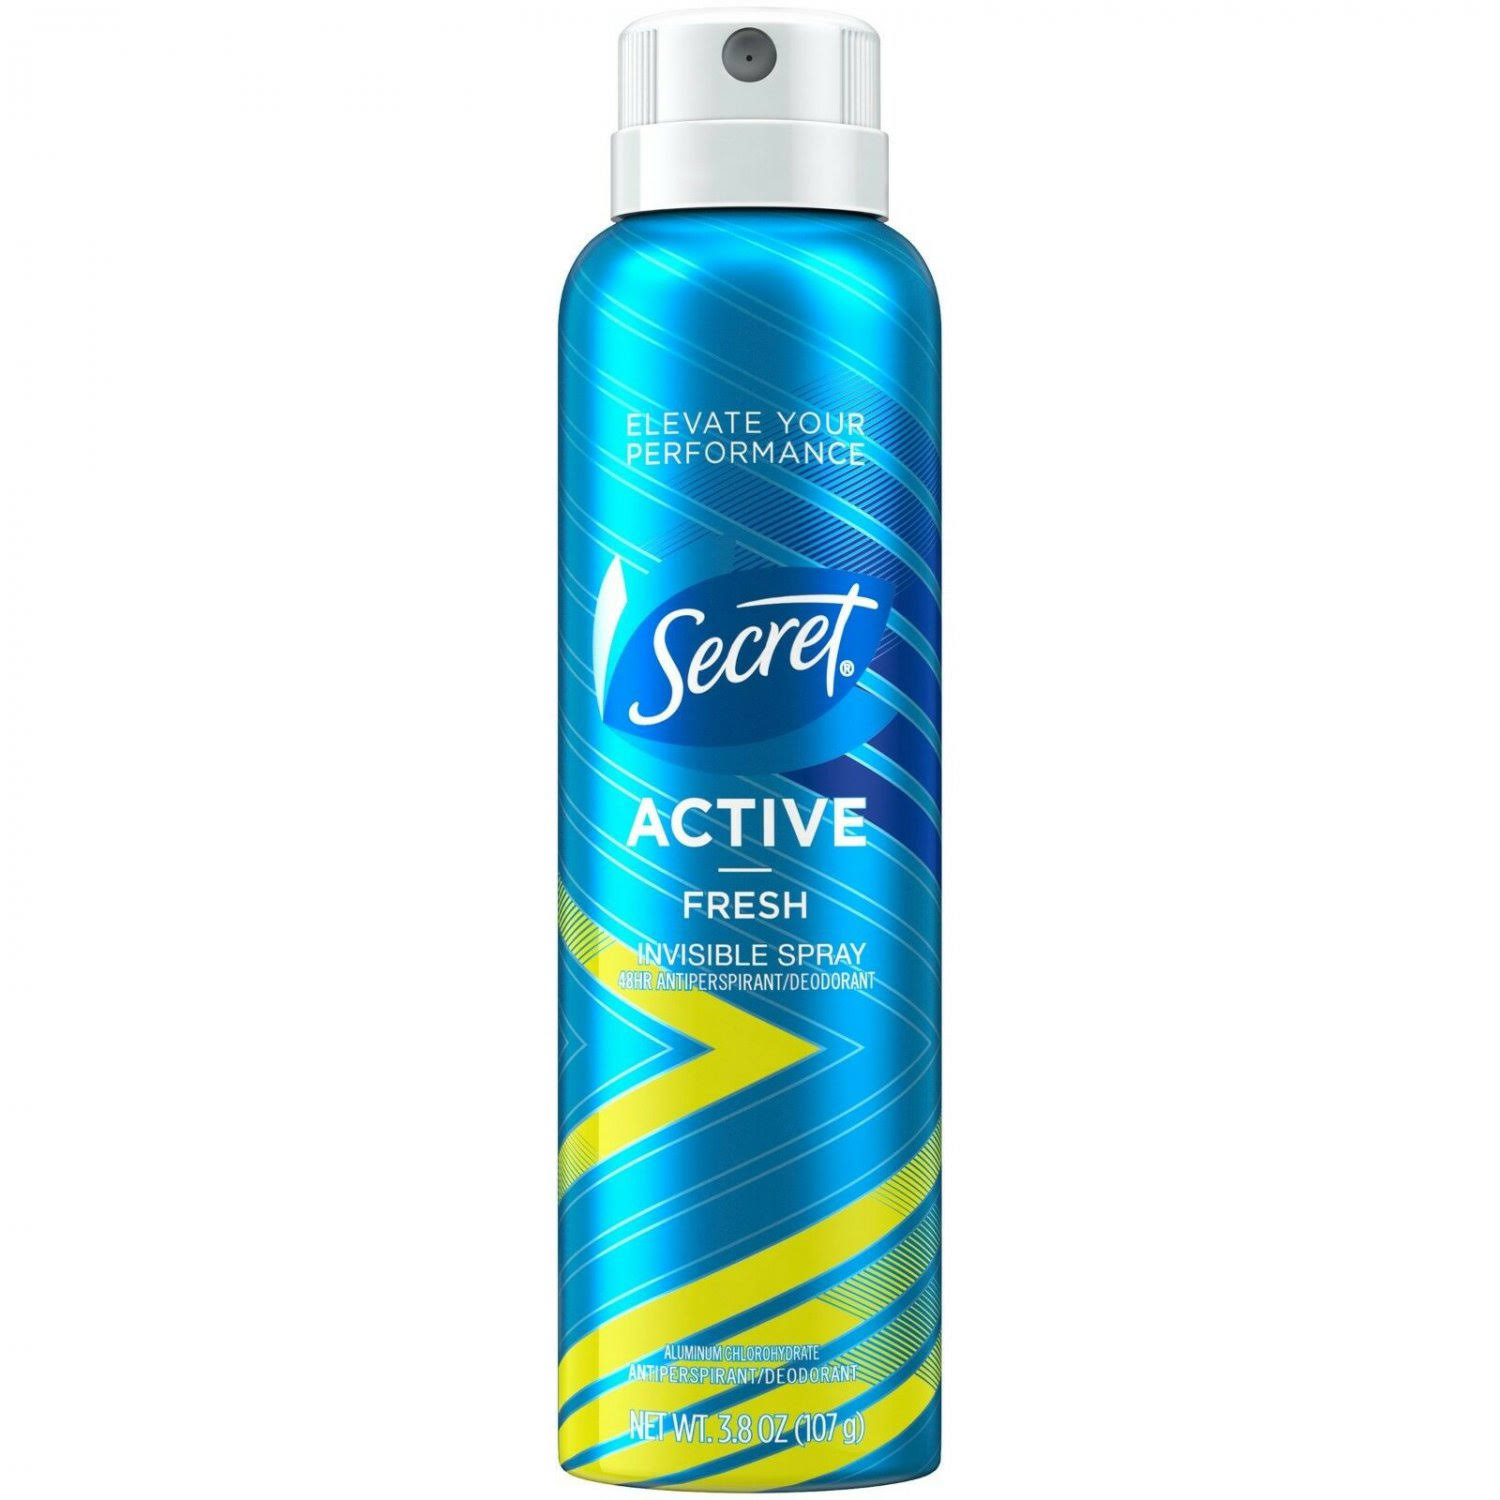 Secret Invisible Spray Antiperspirant and Deodorant Active Fresh